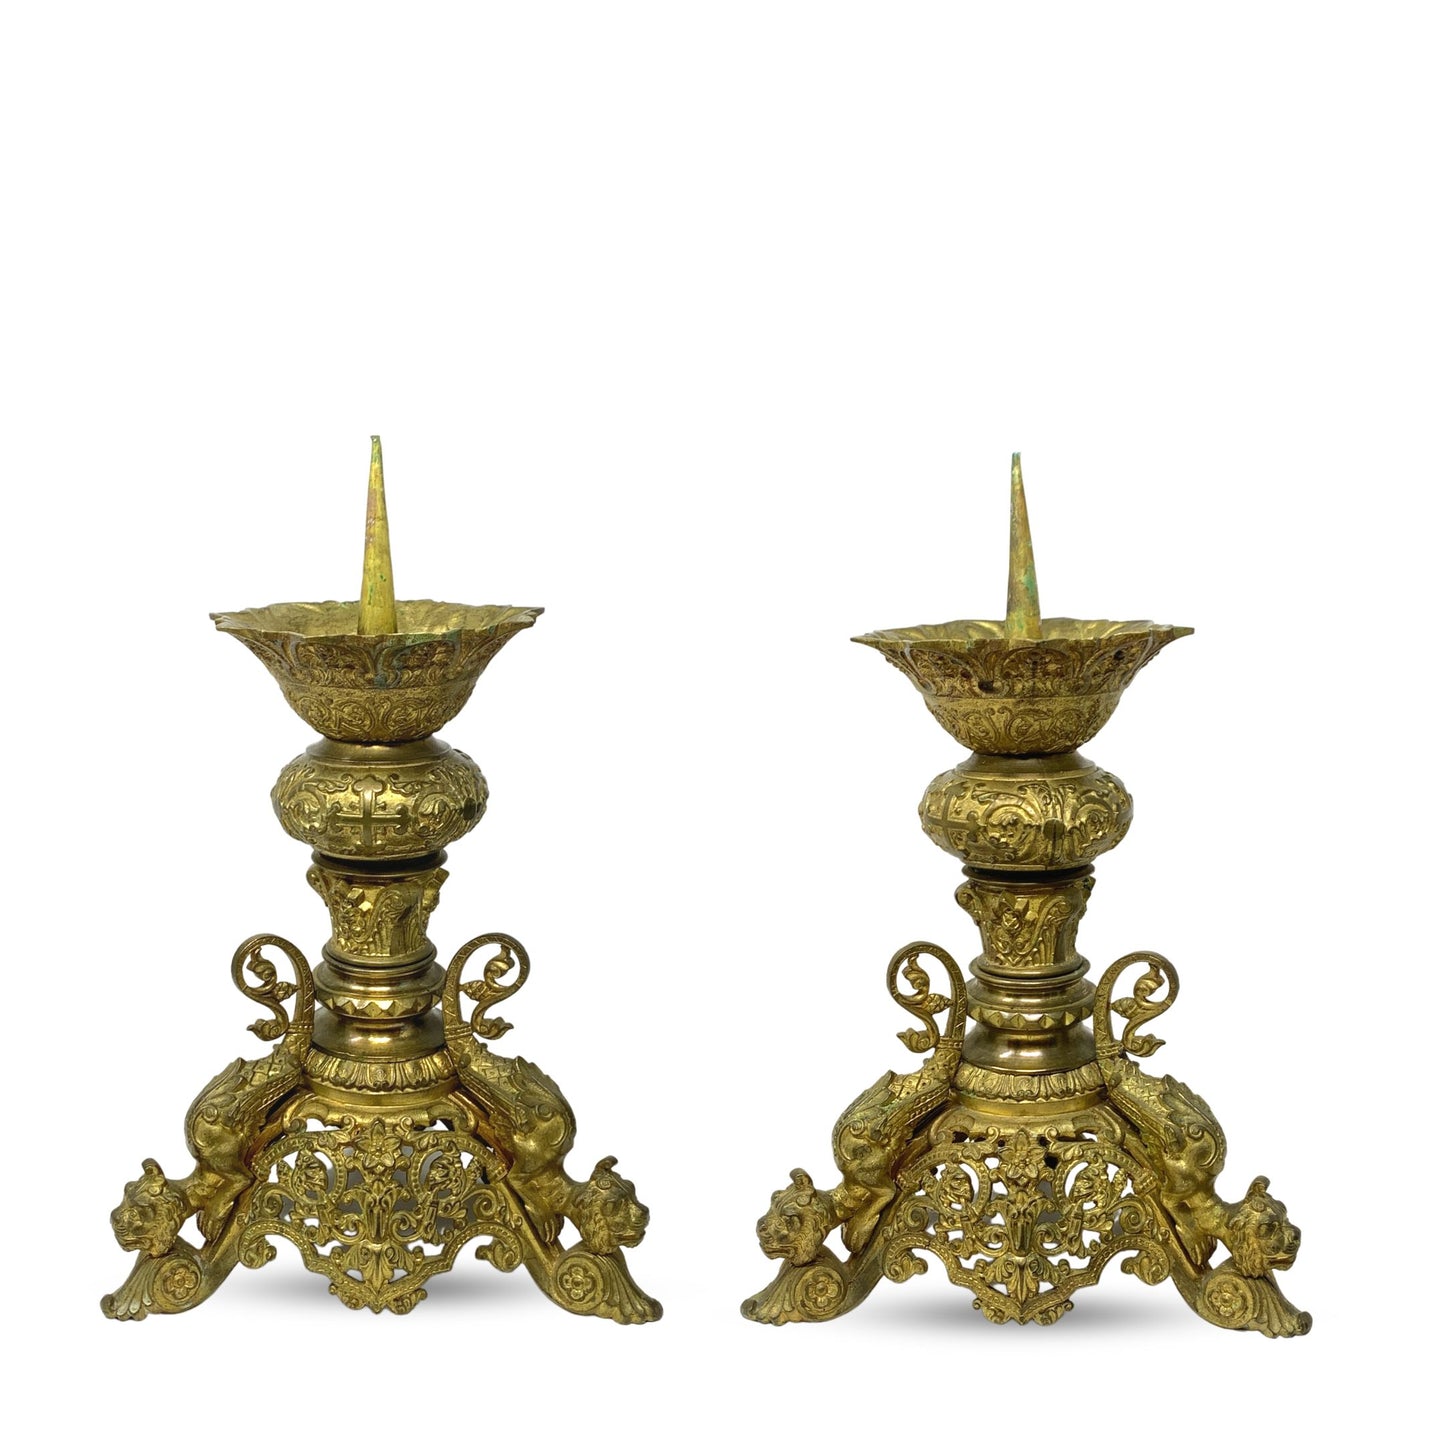 Antique Gilt Bronze Alter/Tabernacle Candlesticks (Pair)